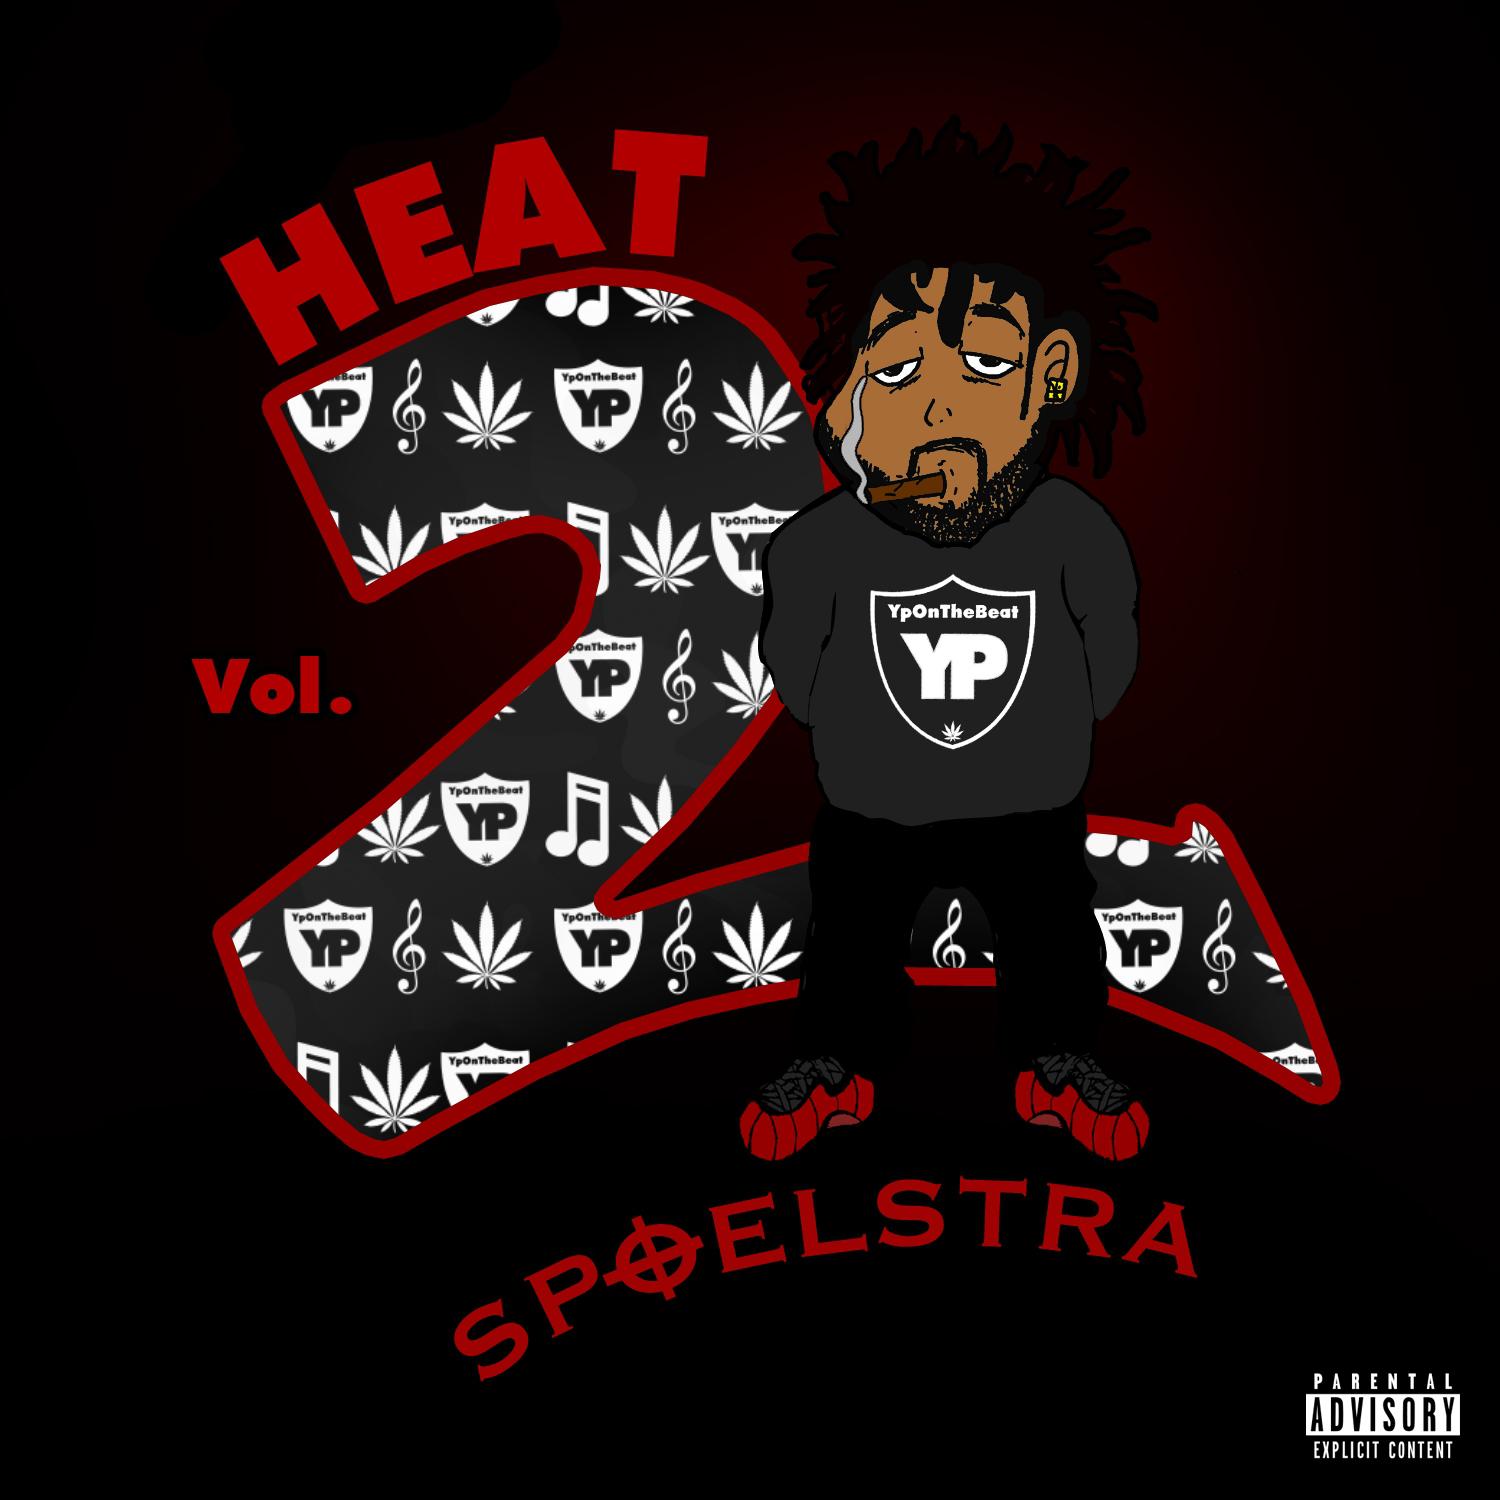 YP $poelstra: Heat Vol. 2 (Deluxe Edition)